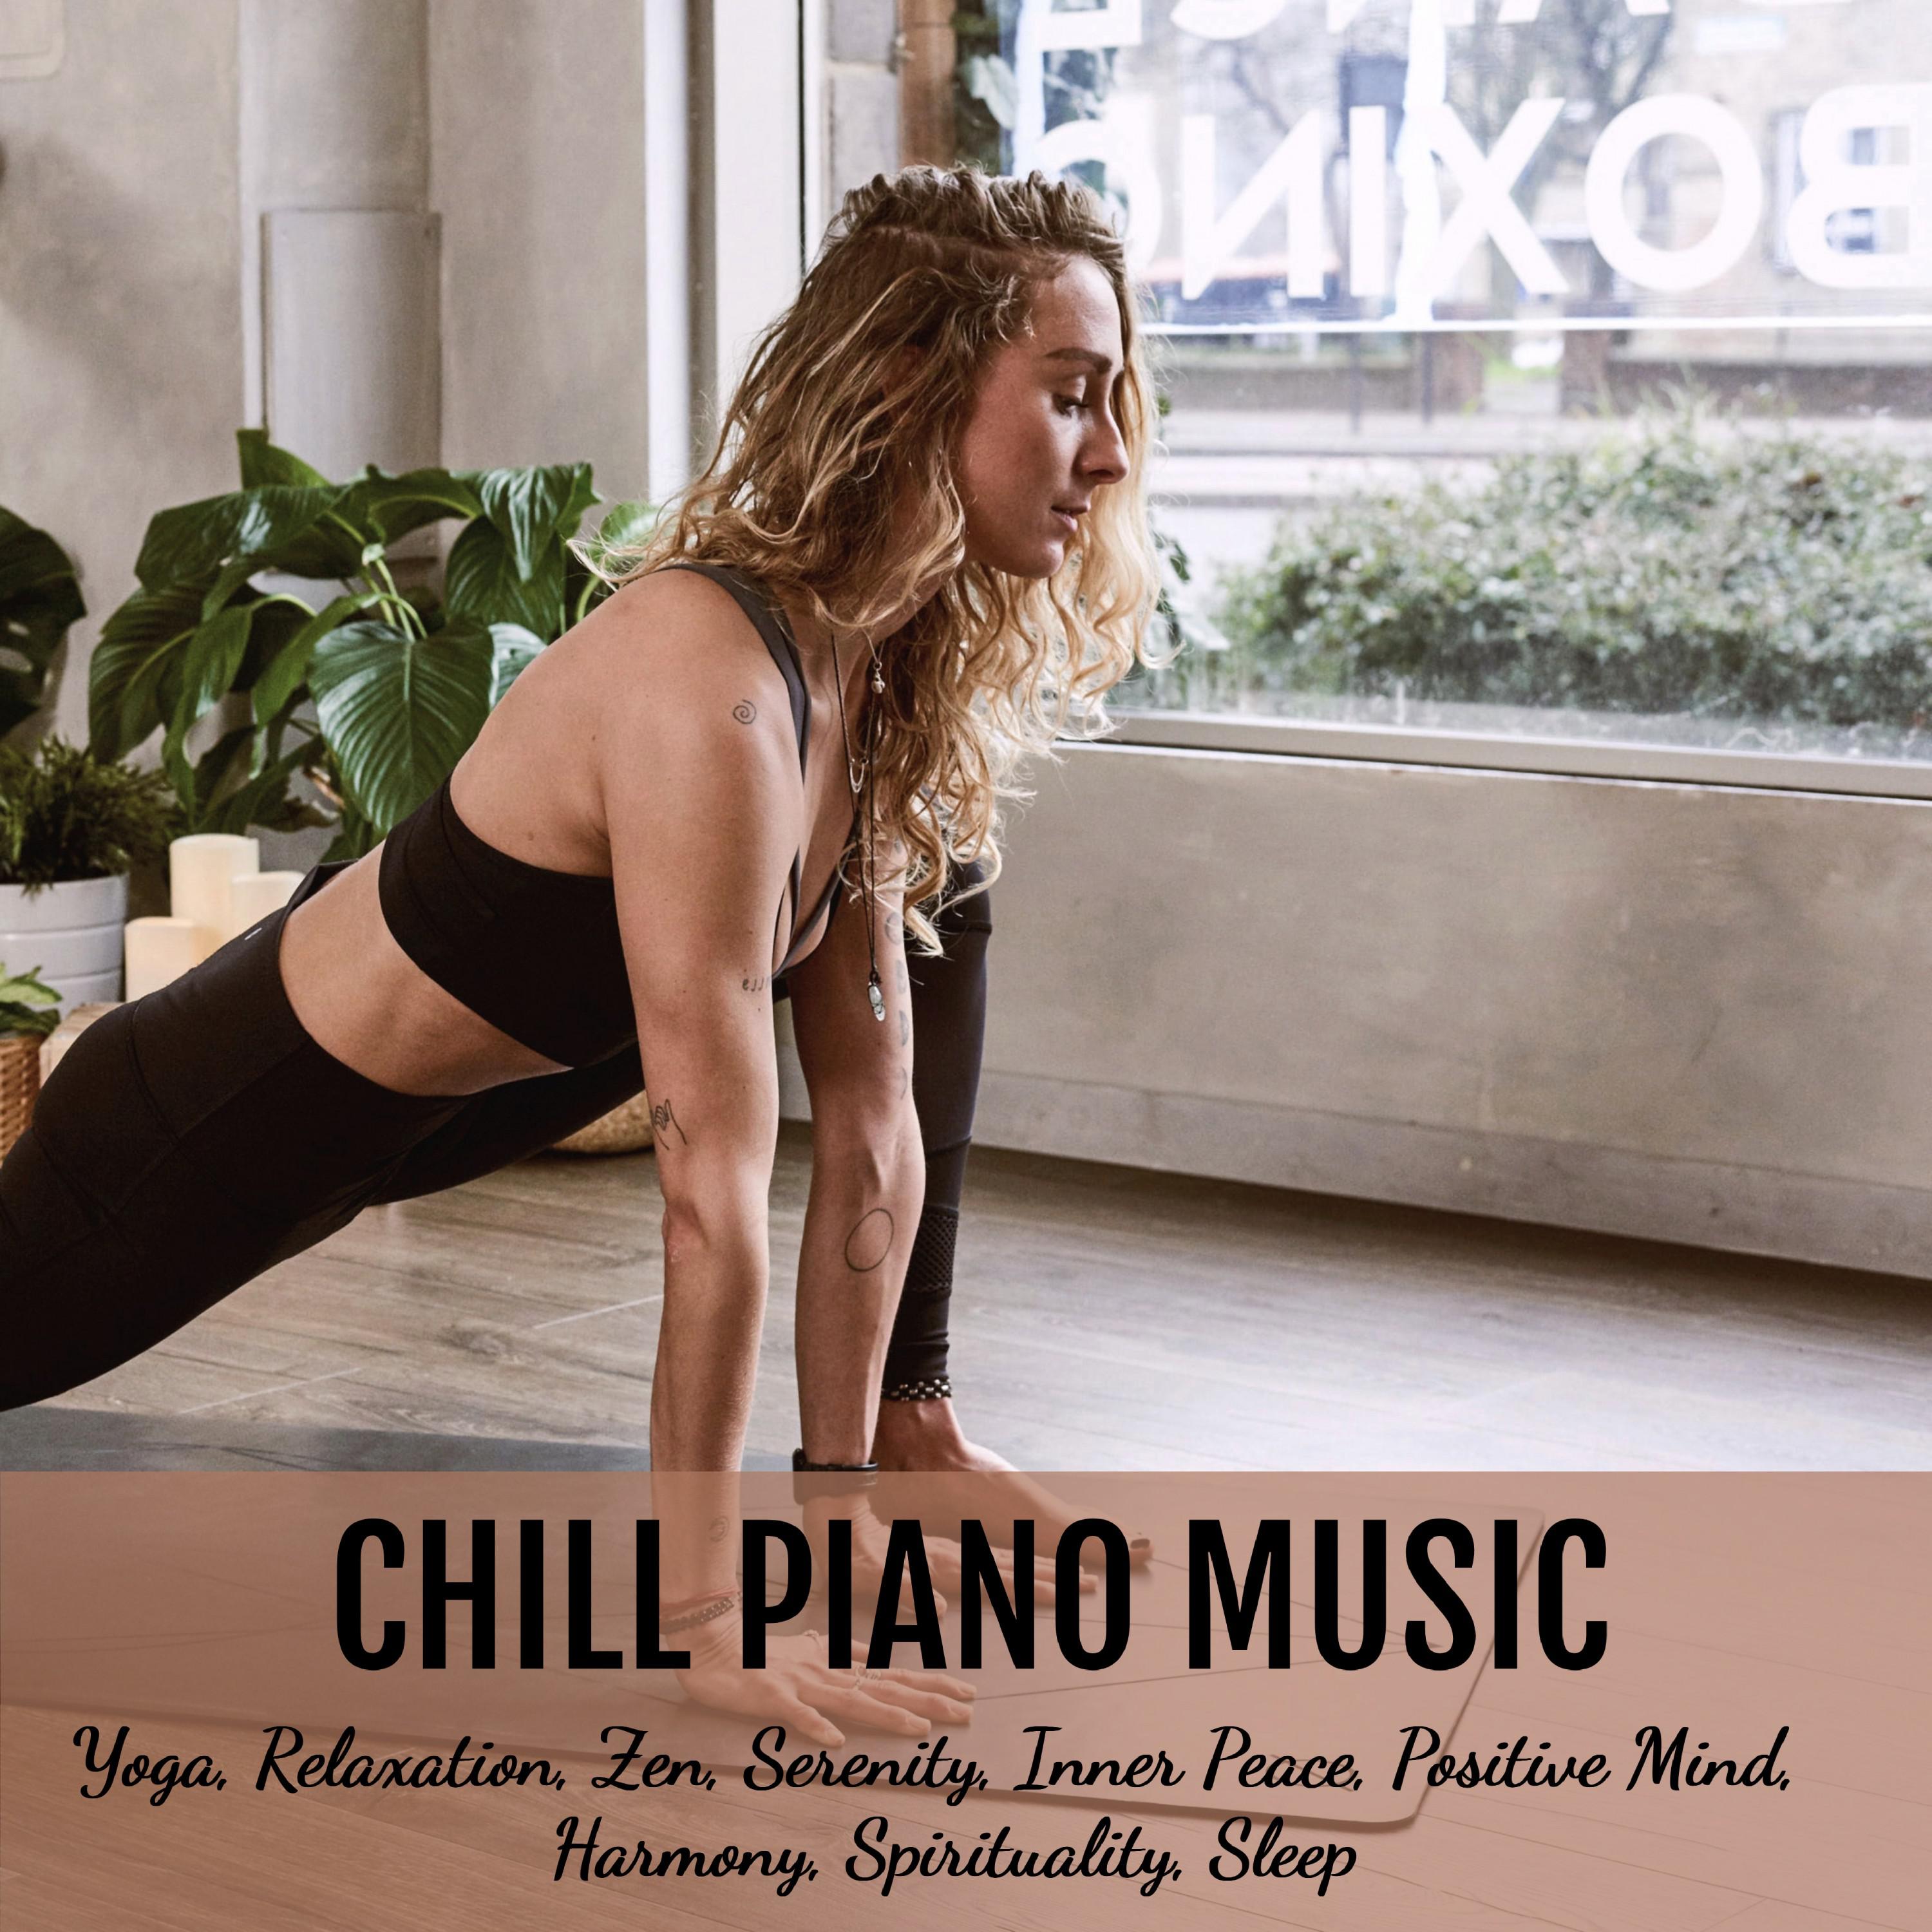 Chill Piano Music for Yoga, Relaxation, Zen, Serenity, Inner Peace, Positive Mind, Harmony, Spirituality, Sleep